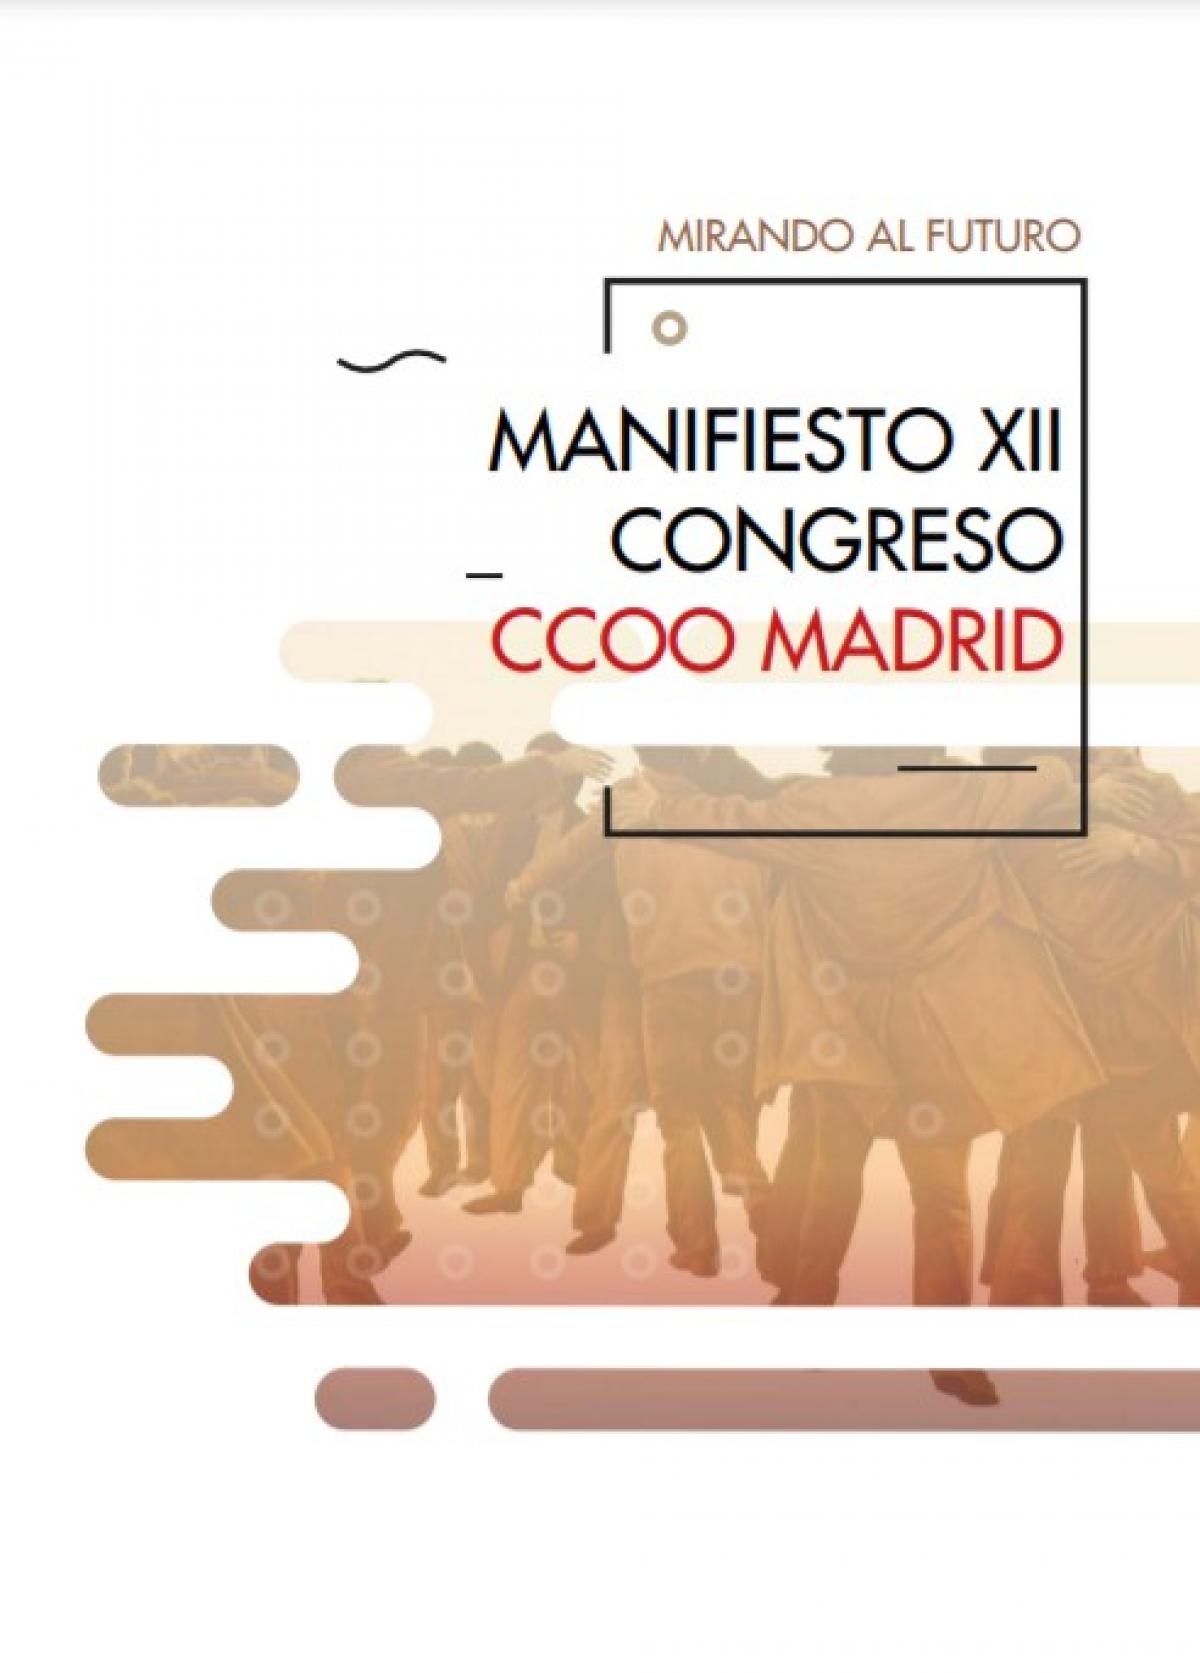 Mirando al Futuro: Manifiesto XII Congreso CCOO Madrid